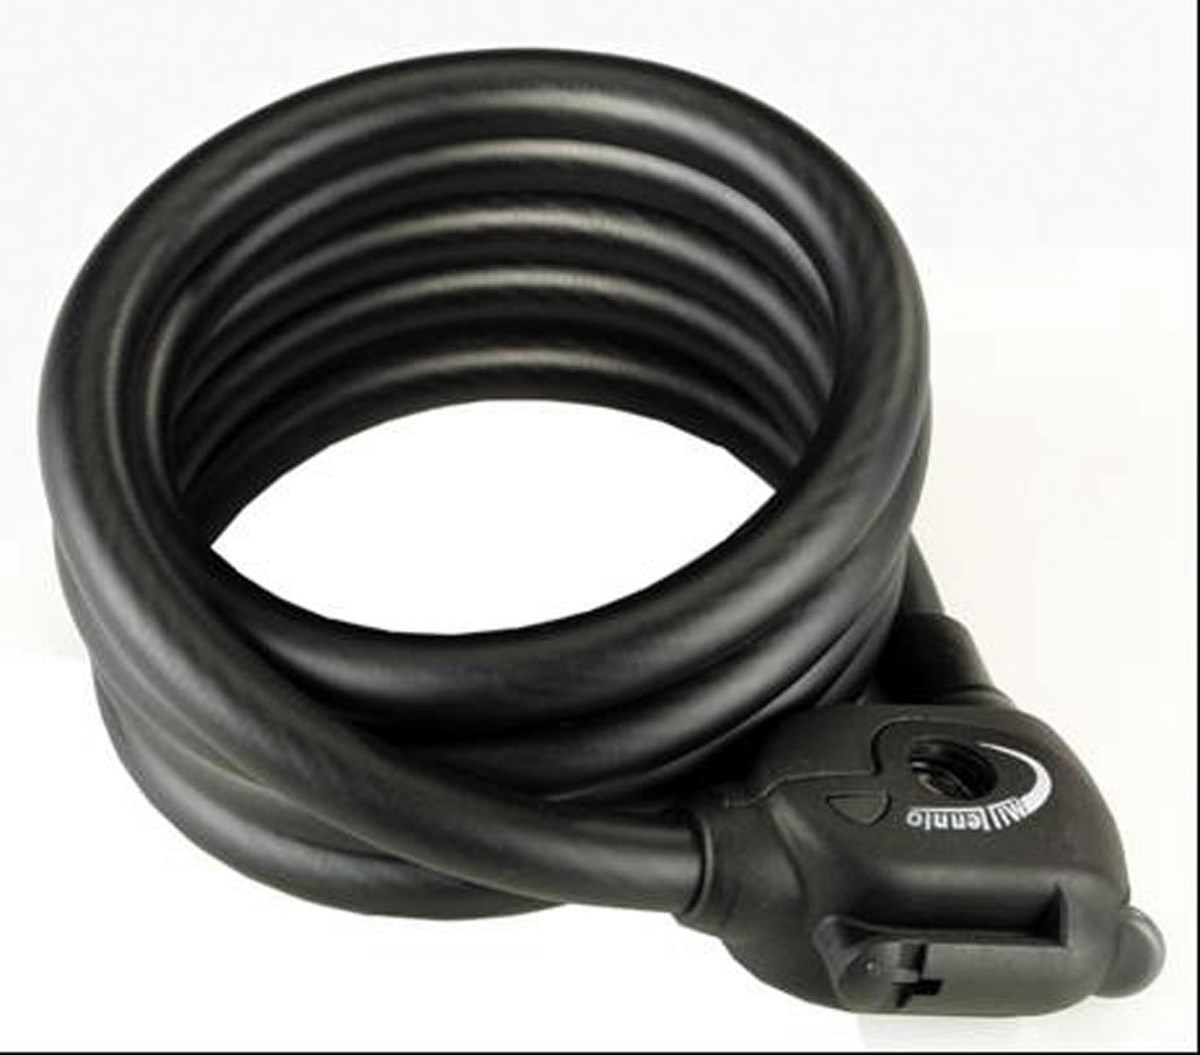 Abus Millennio Phantom 895/185 Cable Lock product image